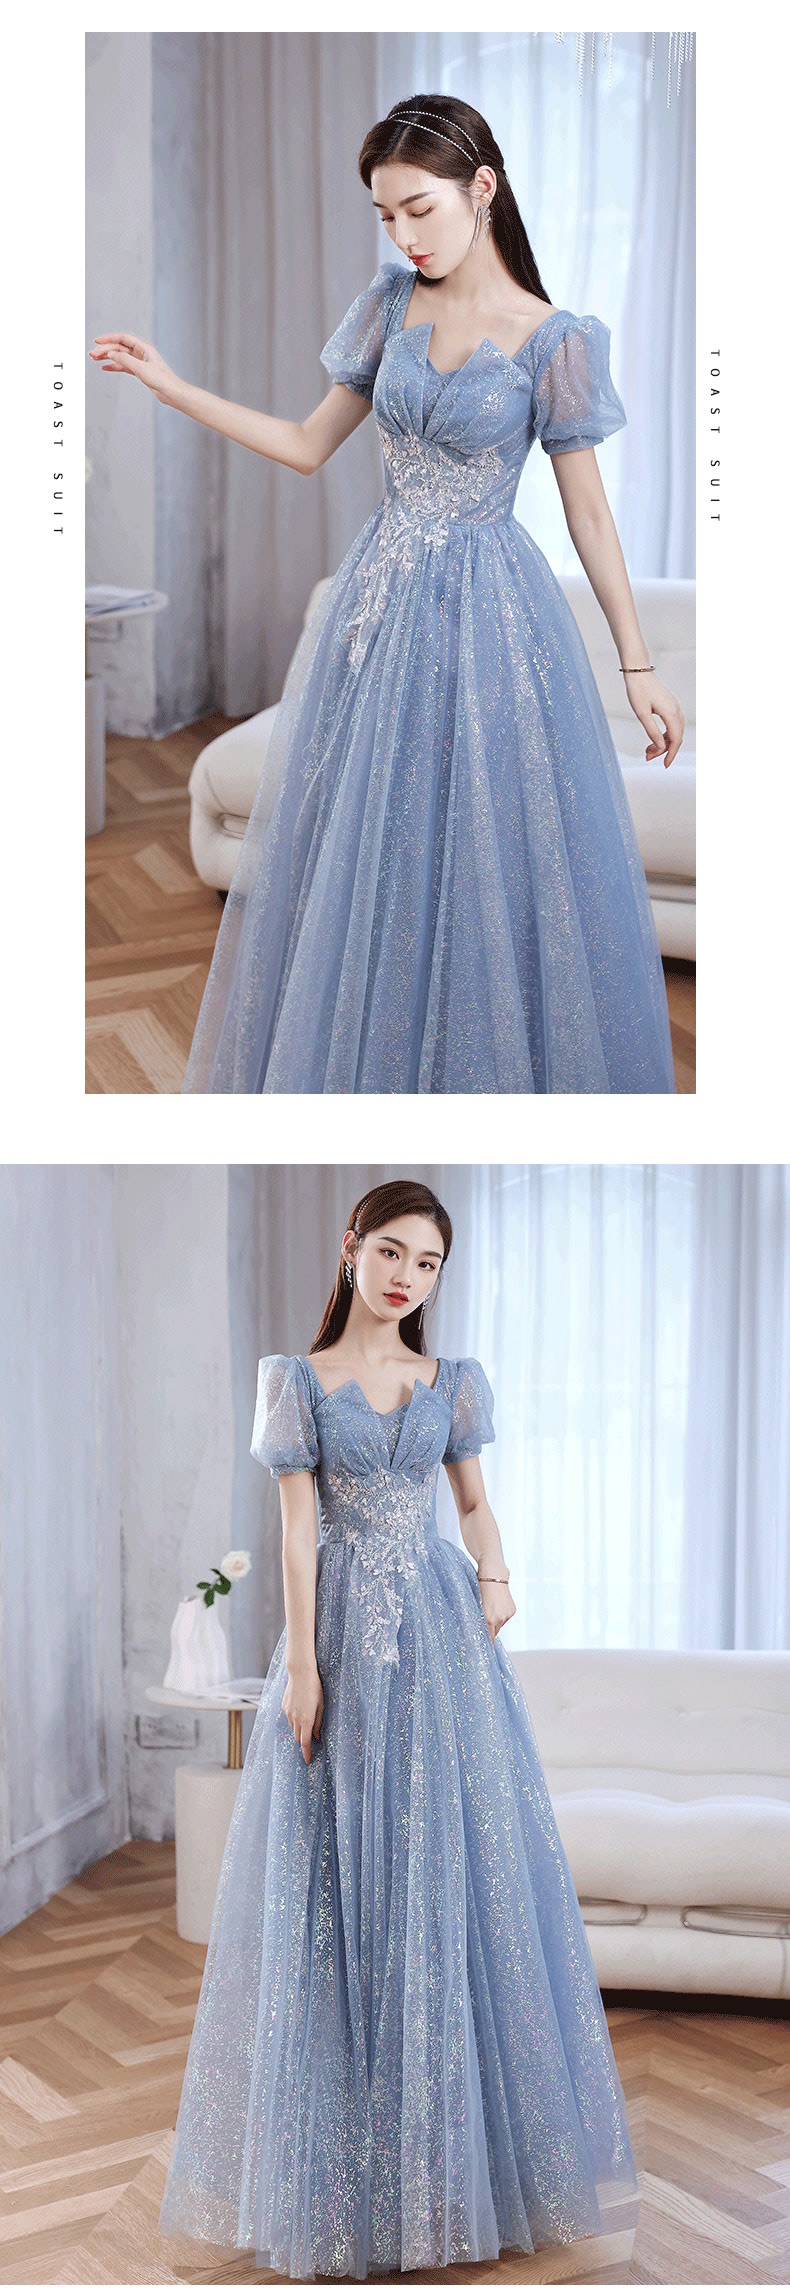 Short Sleeve Blue Formal Dress Evening Party Long Ball Gown13